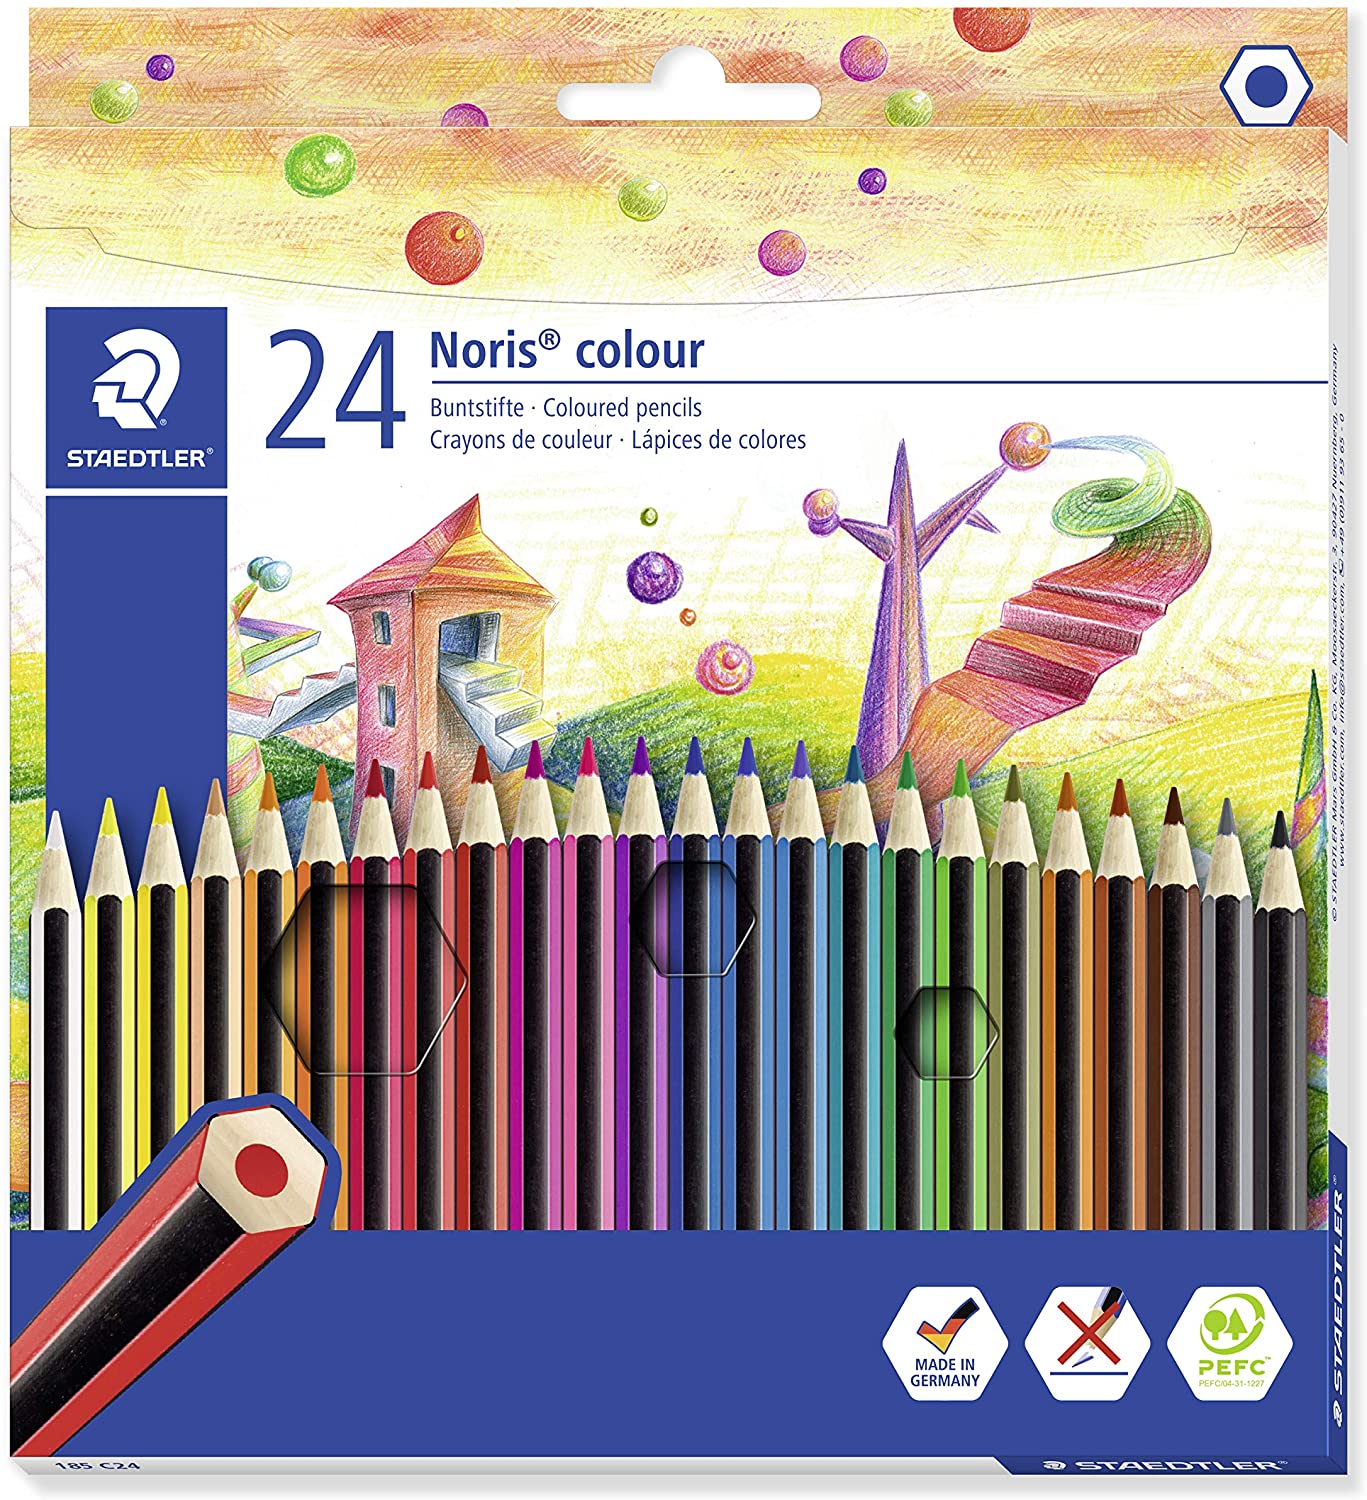 Staedtler Noris colouring pencils